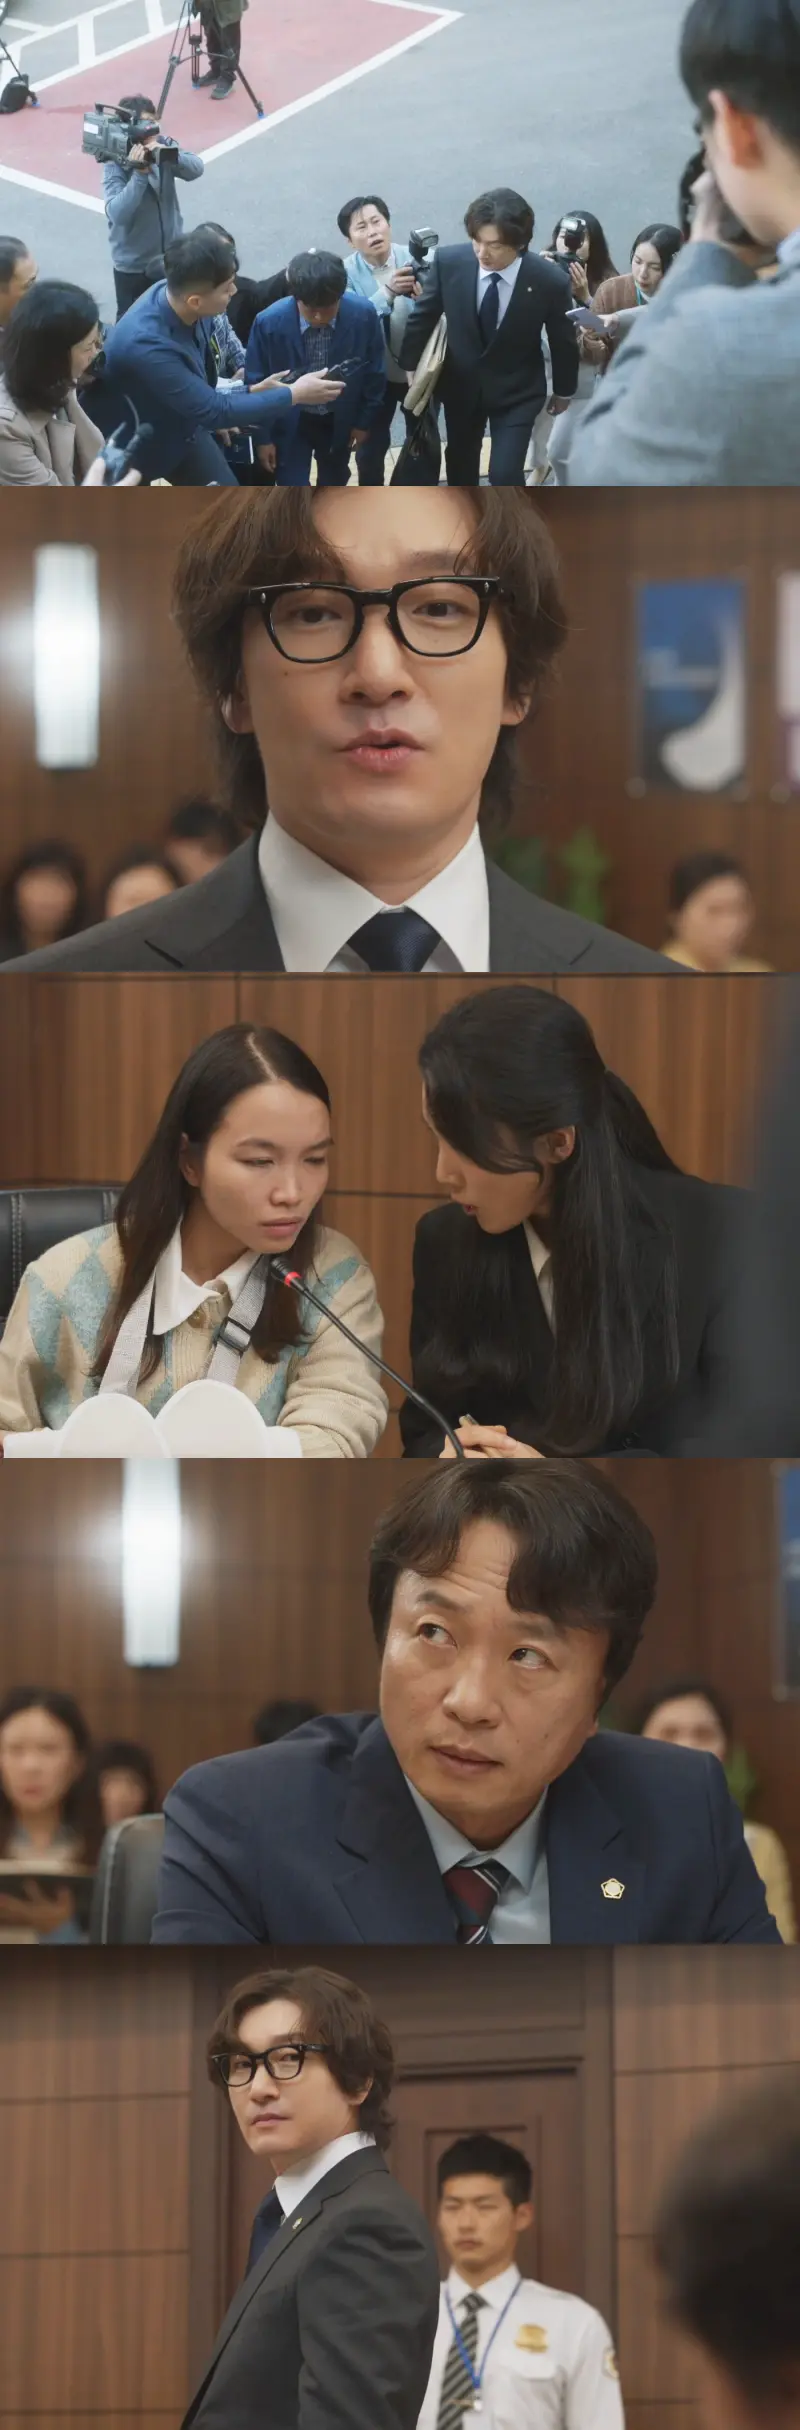 Divorce Attorney Shin Episode 8 Recap Kdrama